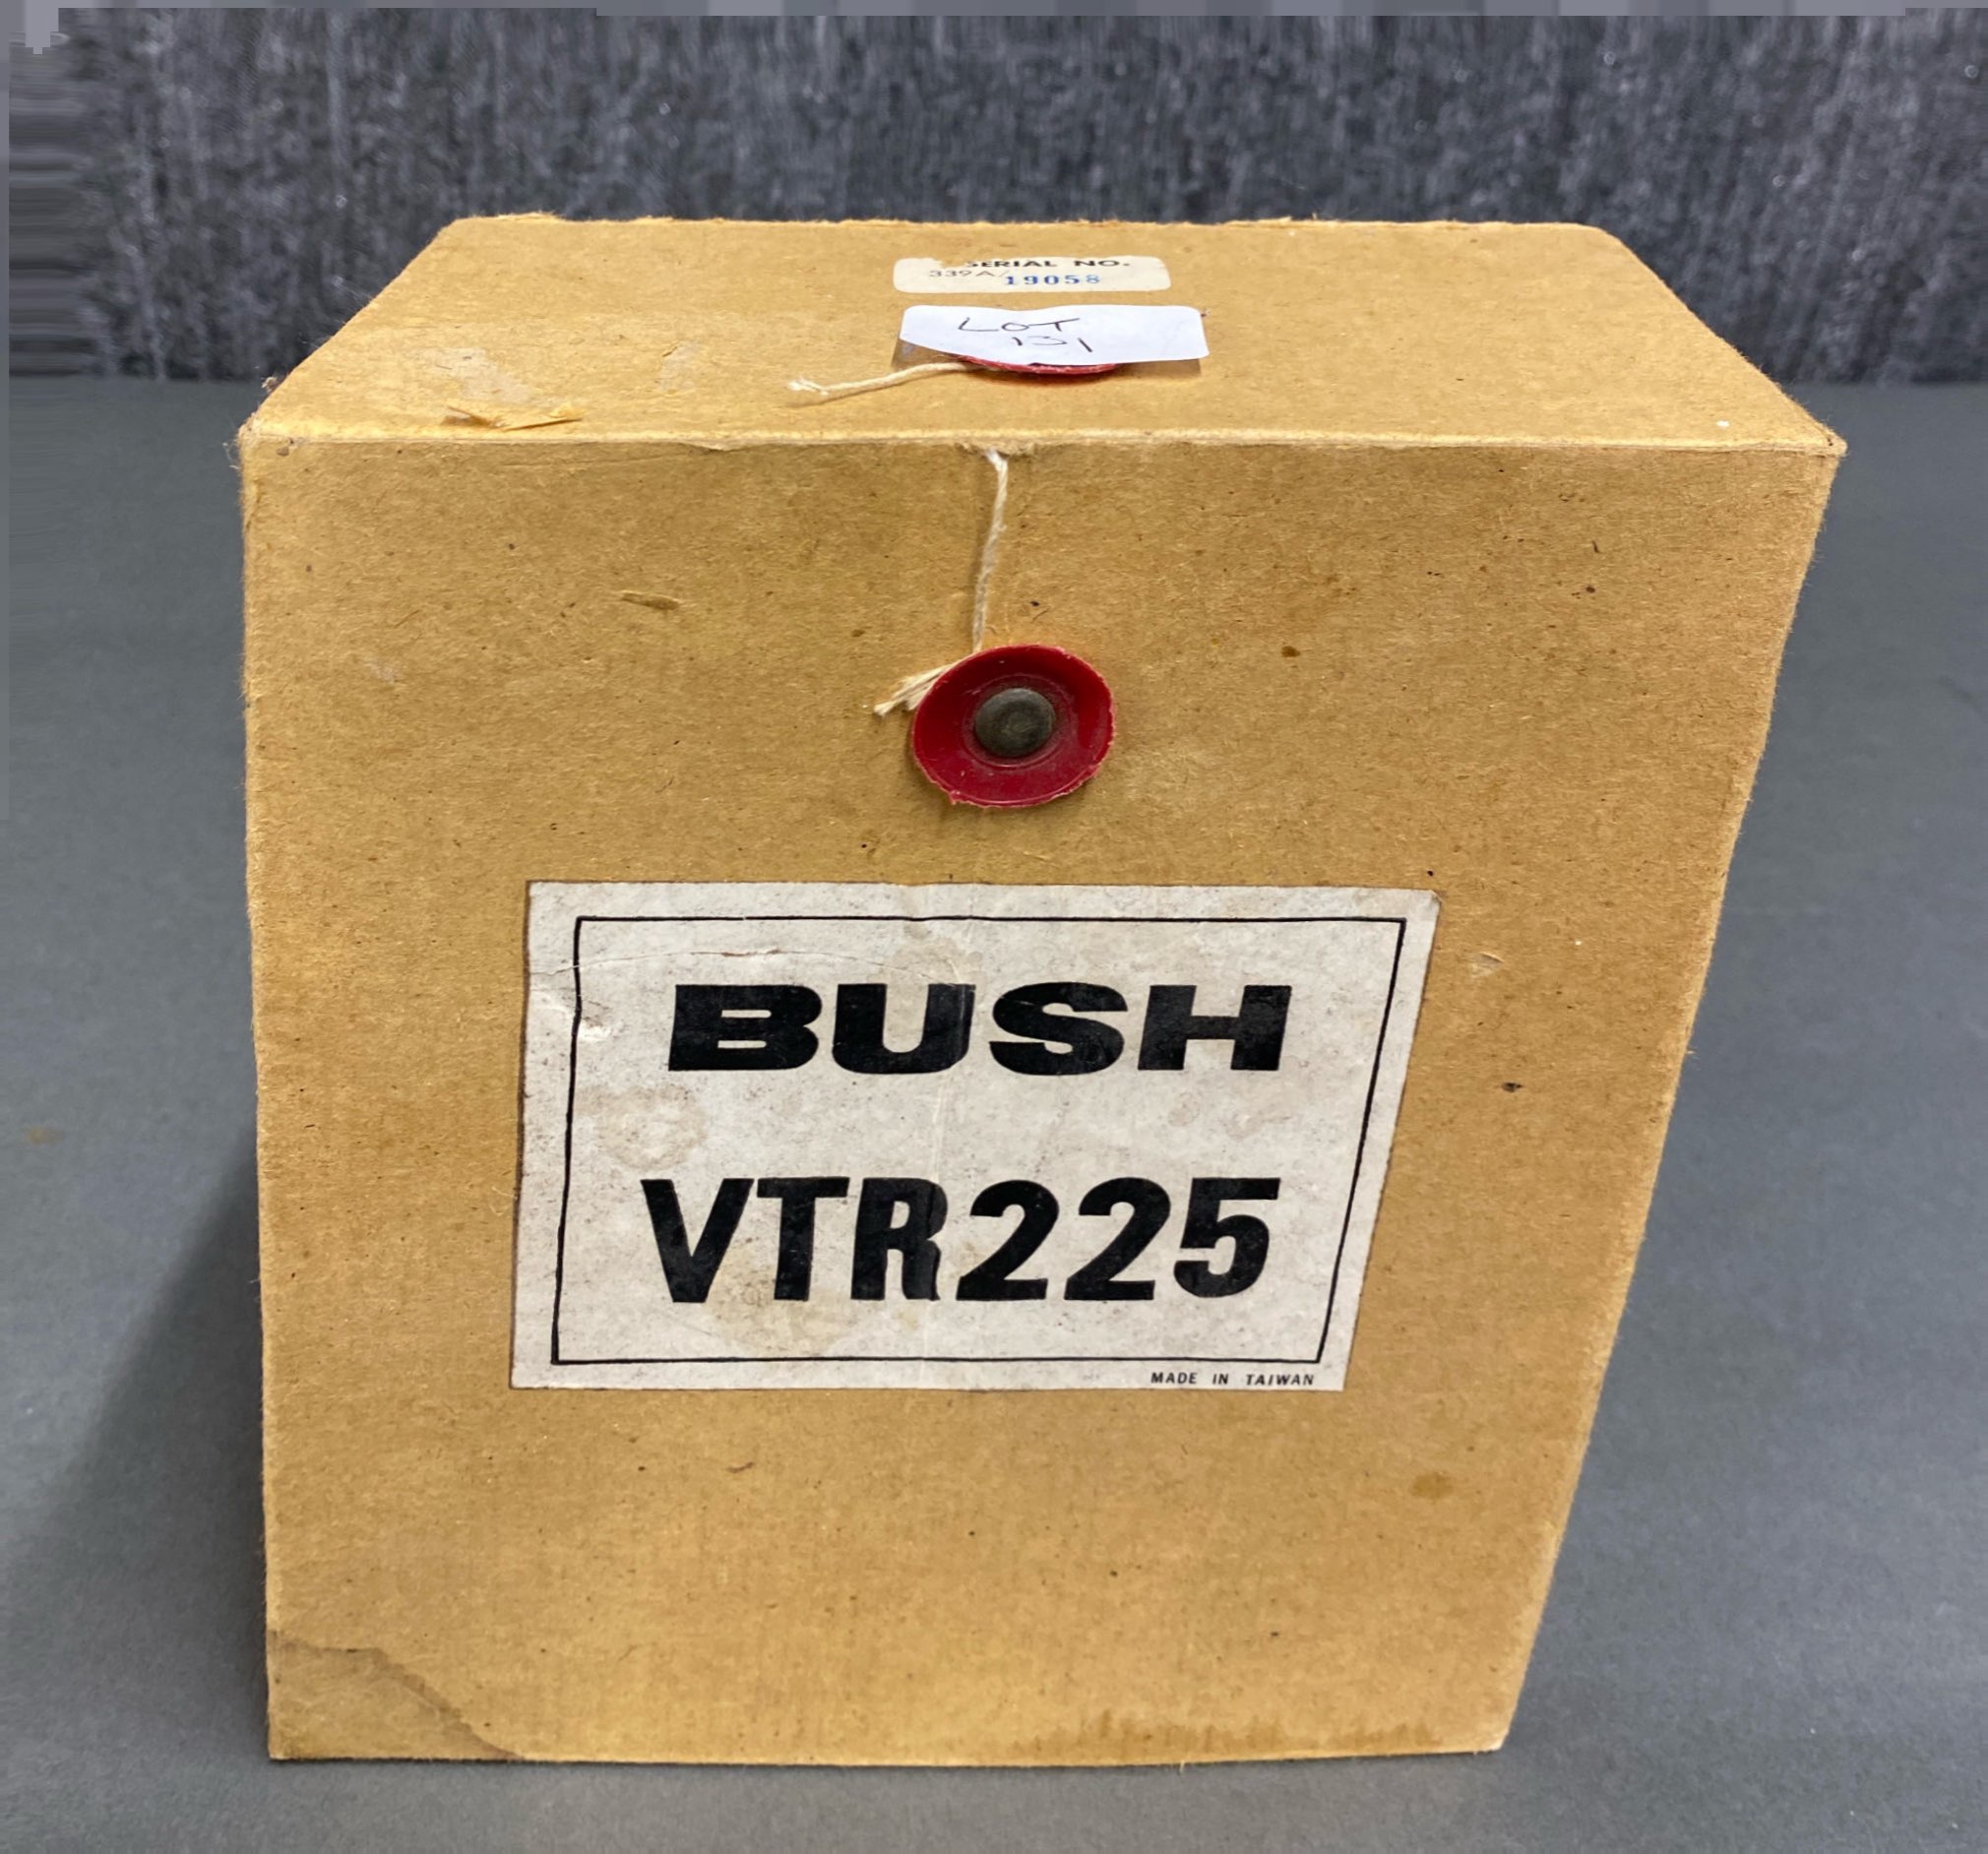 A boxed Bush VTR225 portable transistor radio.